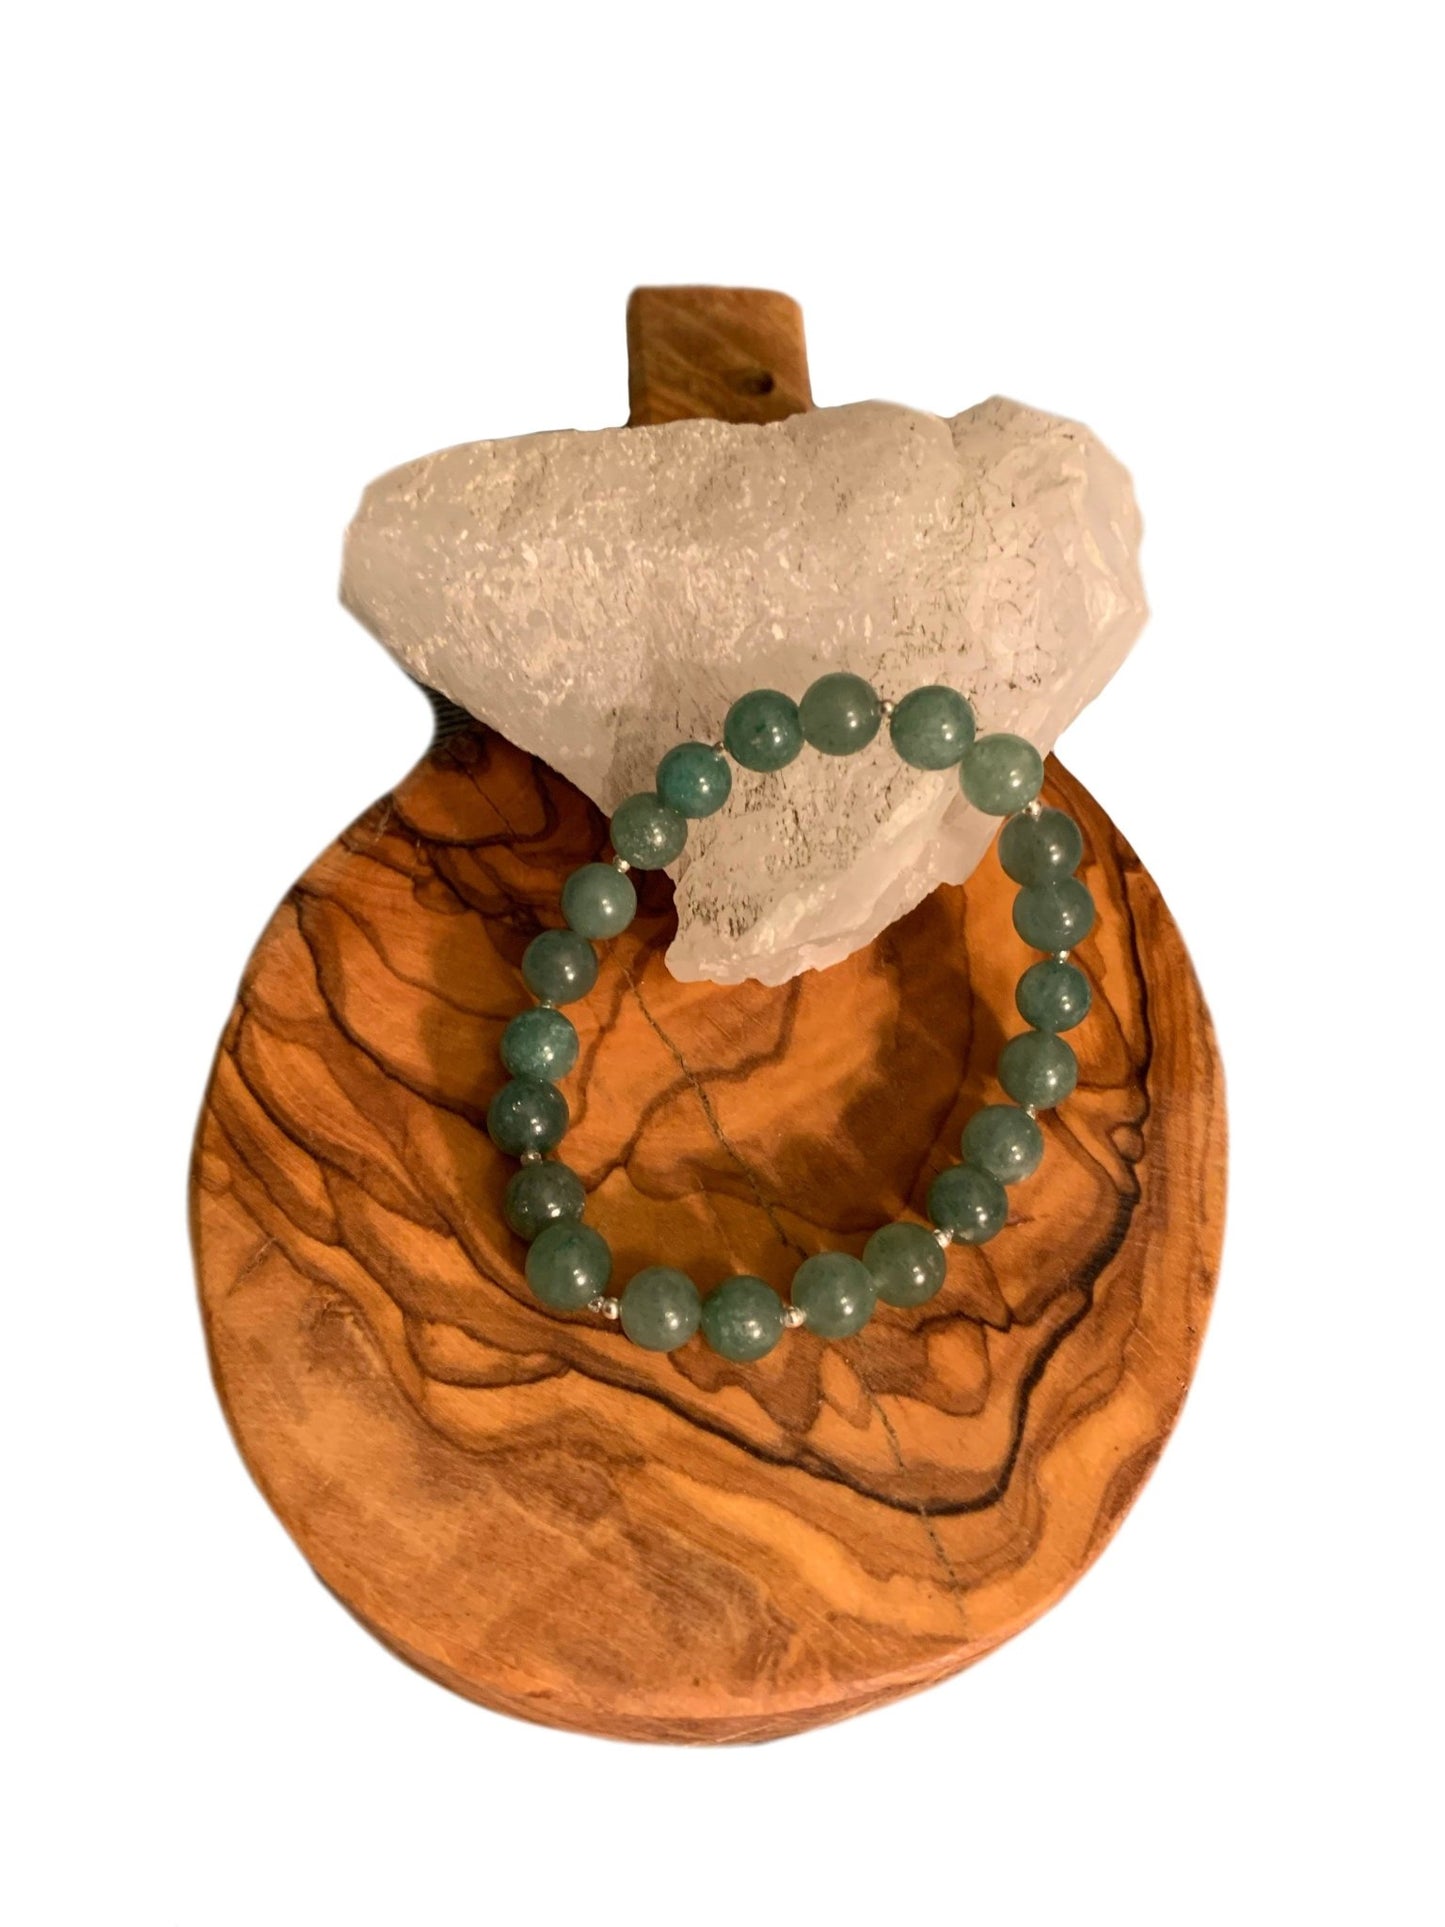 🔴SOLD🔴 Jade Handmade Authentic Dark Green Jade Expandable bracelet - Born Mystics